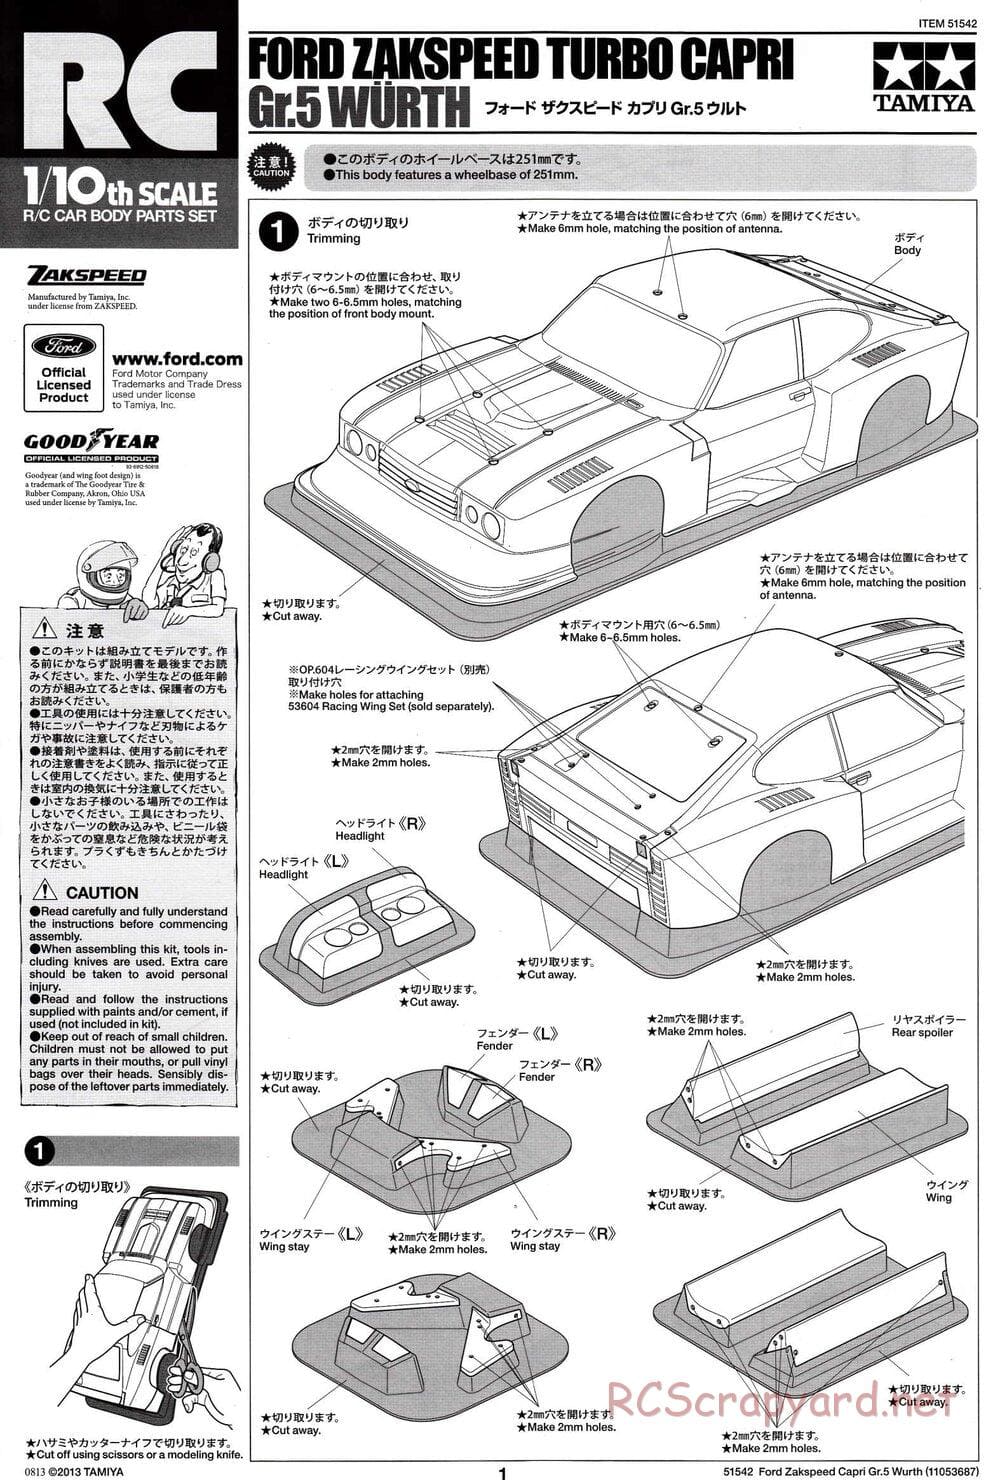 Tamiya - Ford Zakspeed Turbo Capri Gr.5 Wurth - TT-02 Chassis - Body Manual - Page 1